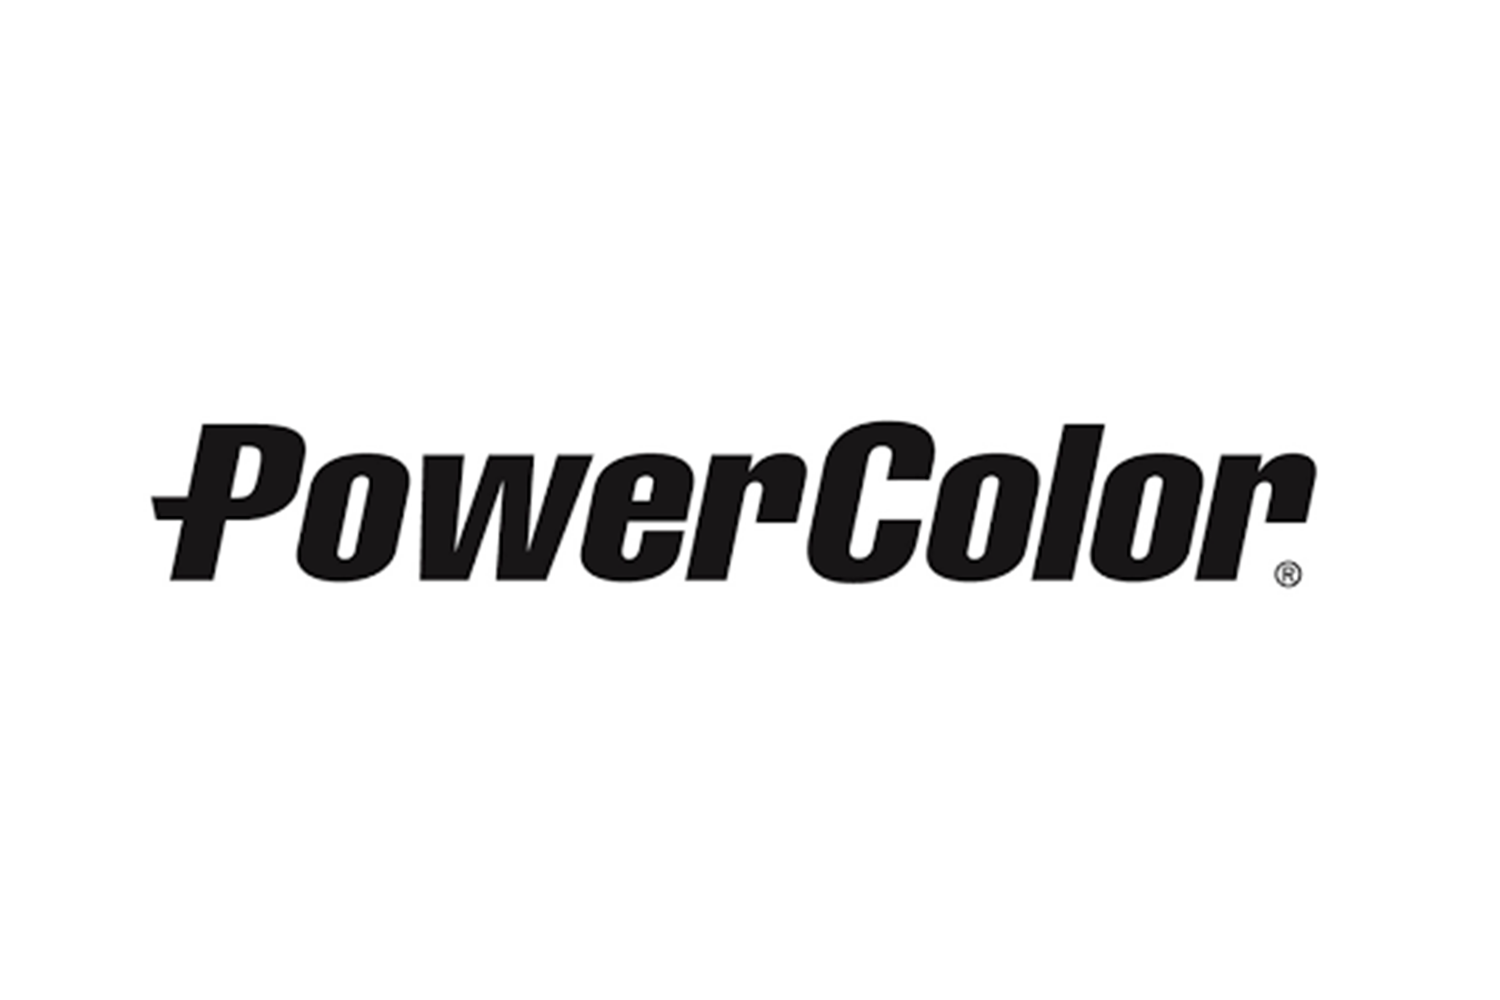 POWERCOLOR POWERCOLOR_logo.png